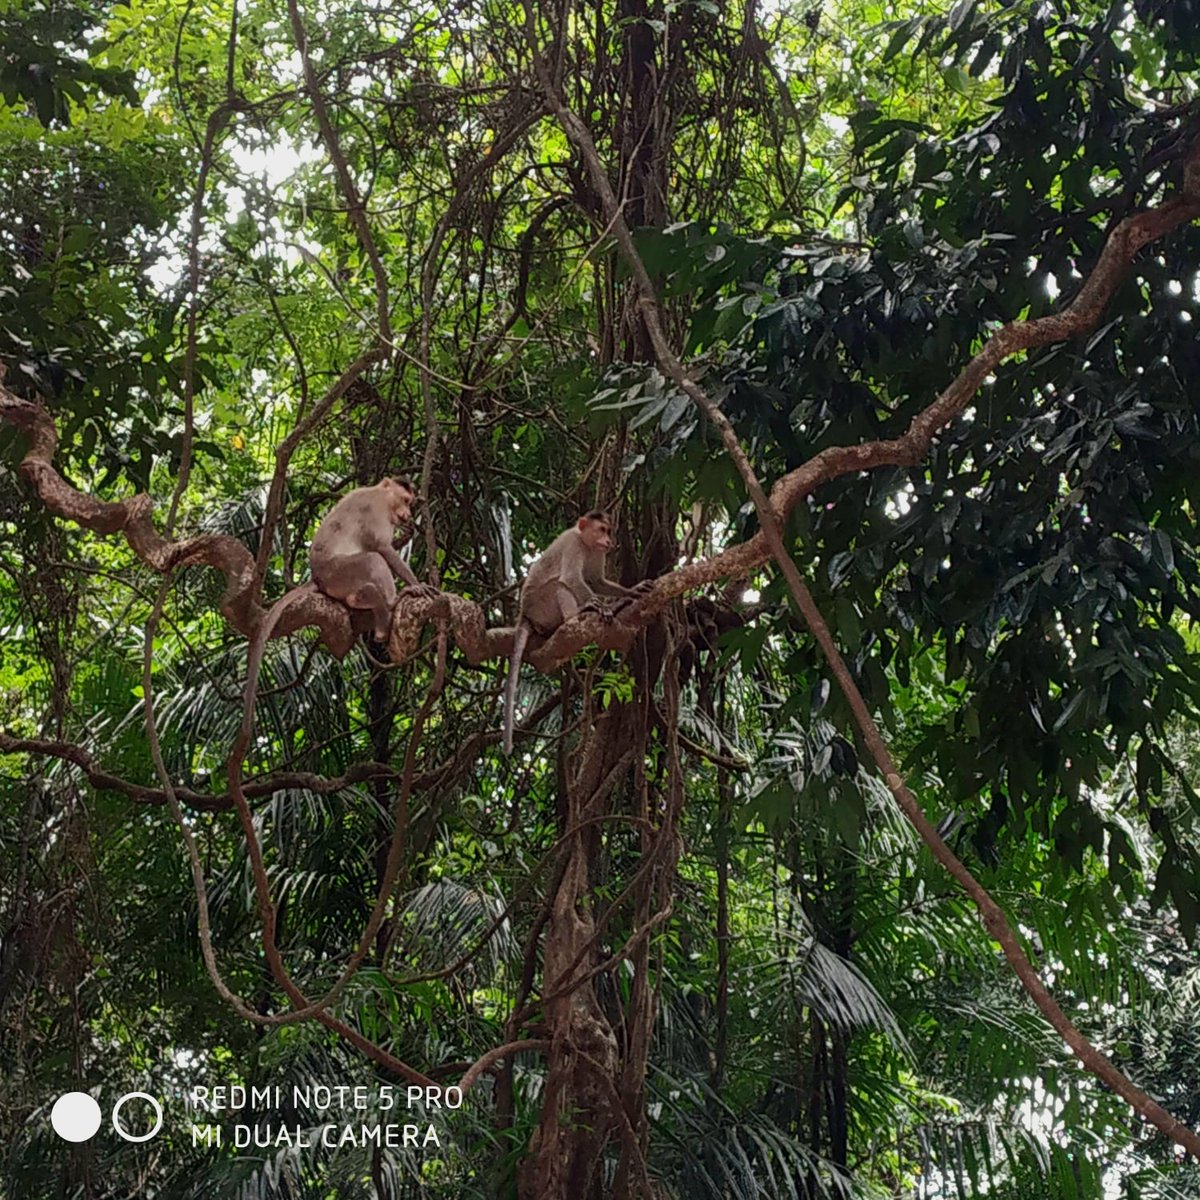 #IndiAves #MammalMagic
We are not afraid of taking a swing!!
At Bhagwan mahveer wild life sanctuary, Goa.